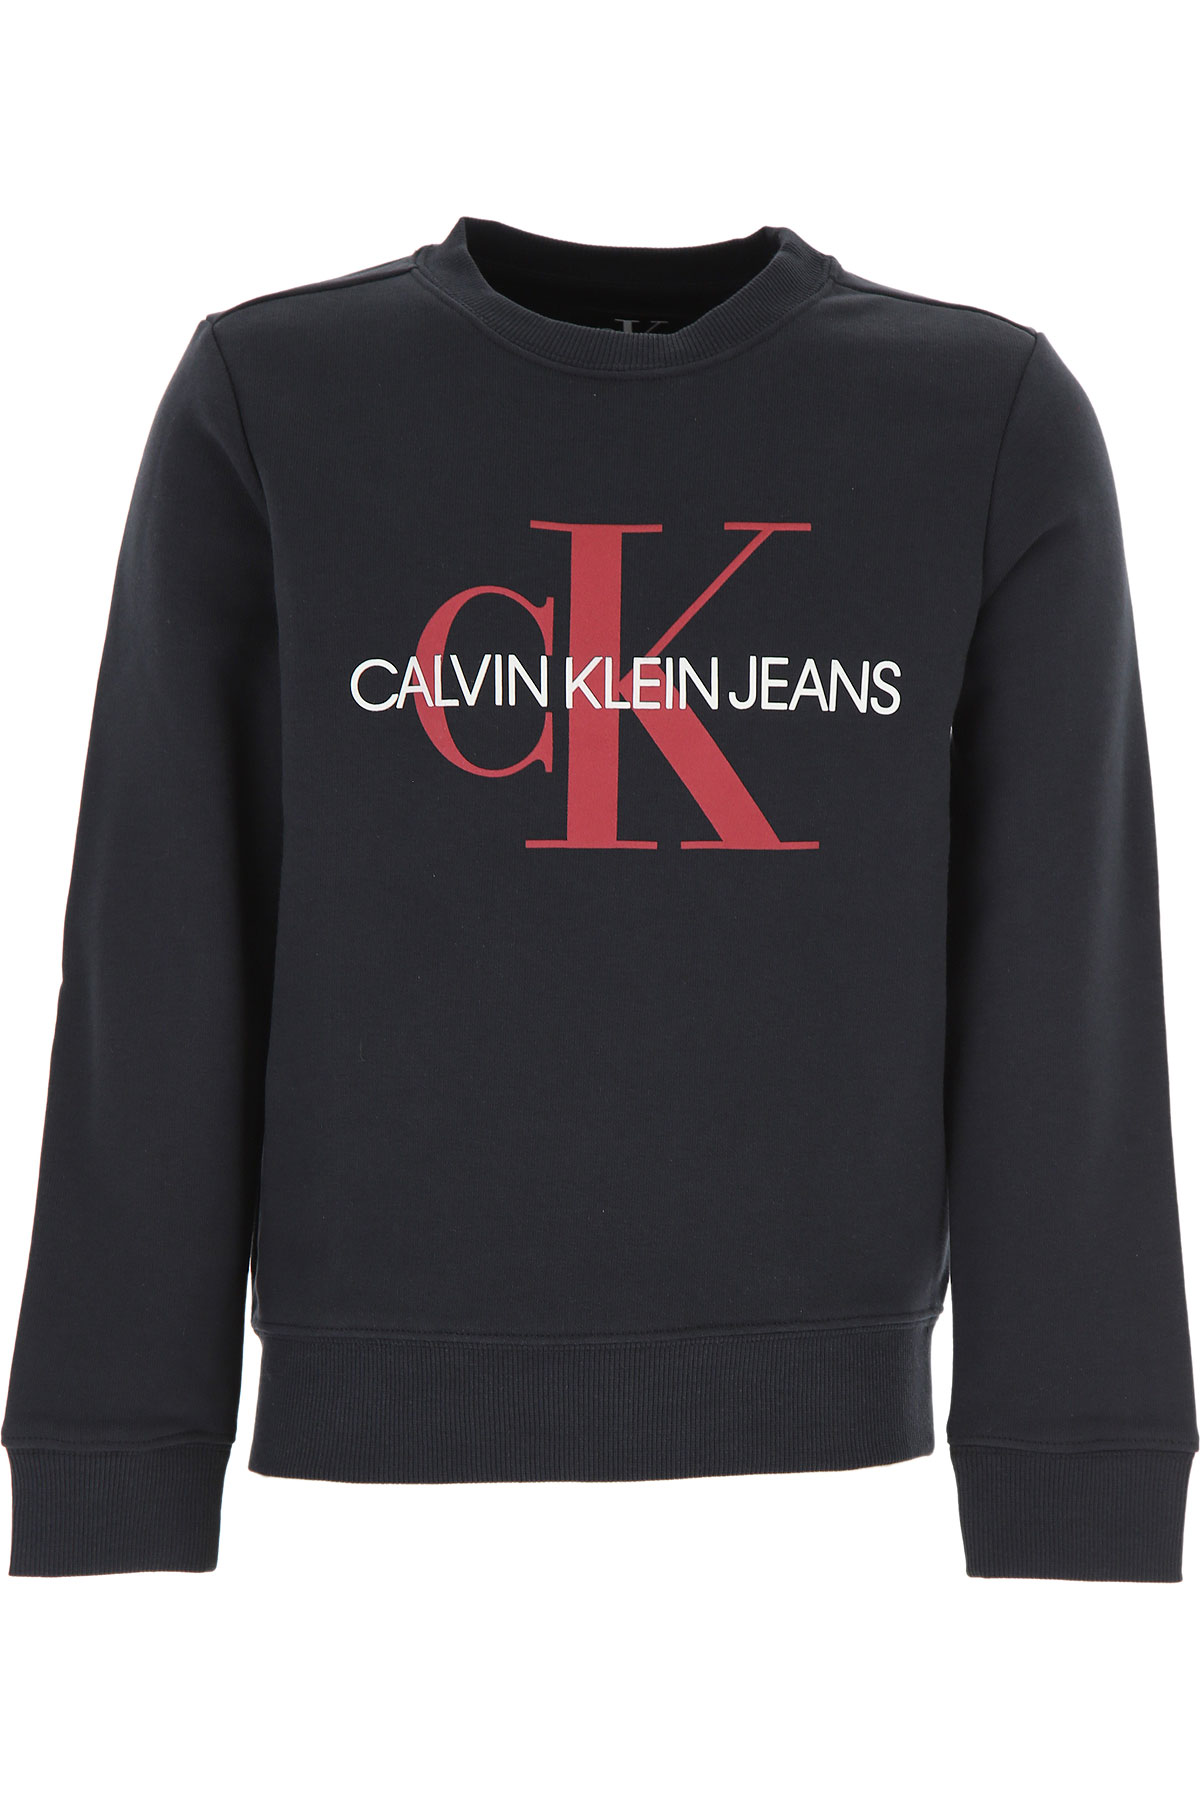 Calvin Klein Kinder Sweatshirt & Kapuzenpullover für Jungen Günstig im Sale, Schwarz, Baumwolle, 2017, 10Y 12Y 14Y 16Y 4Y 6Y 8Y